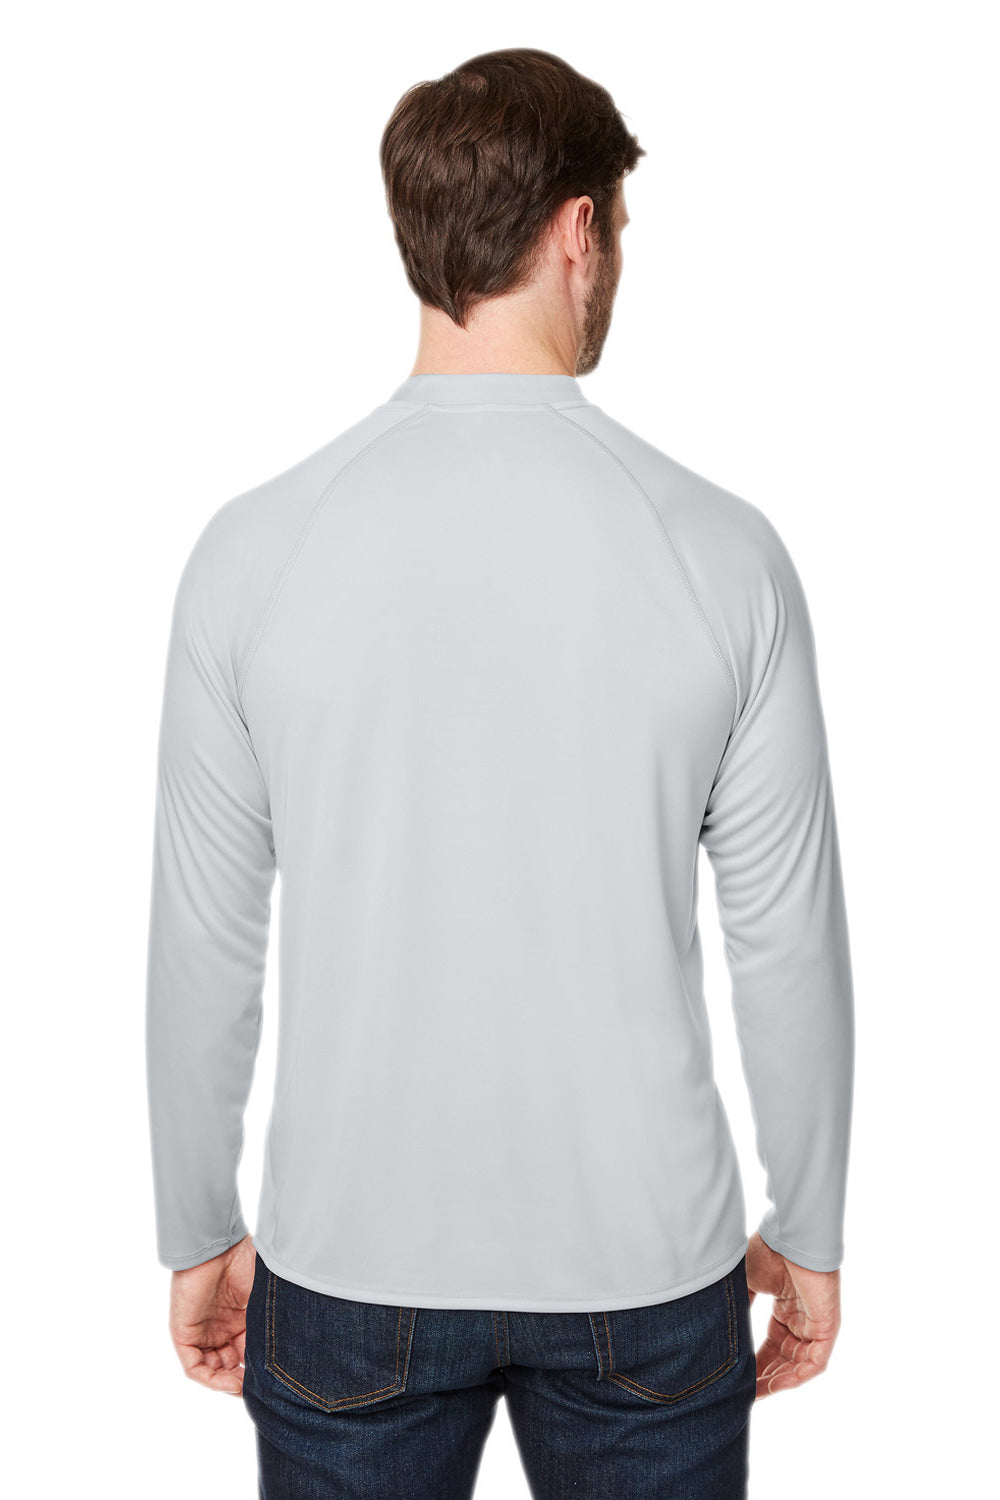 Core 365 CE110 Mens Ultra MVP Raglan Long Sleeve T-Shirt Platinum Grey Back